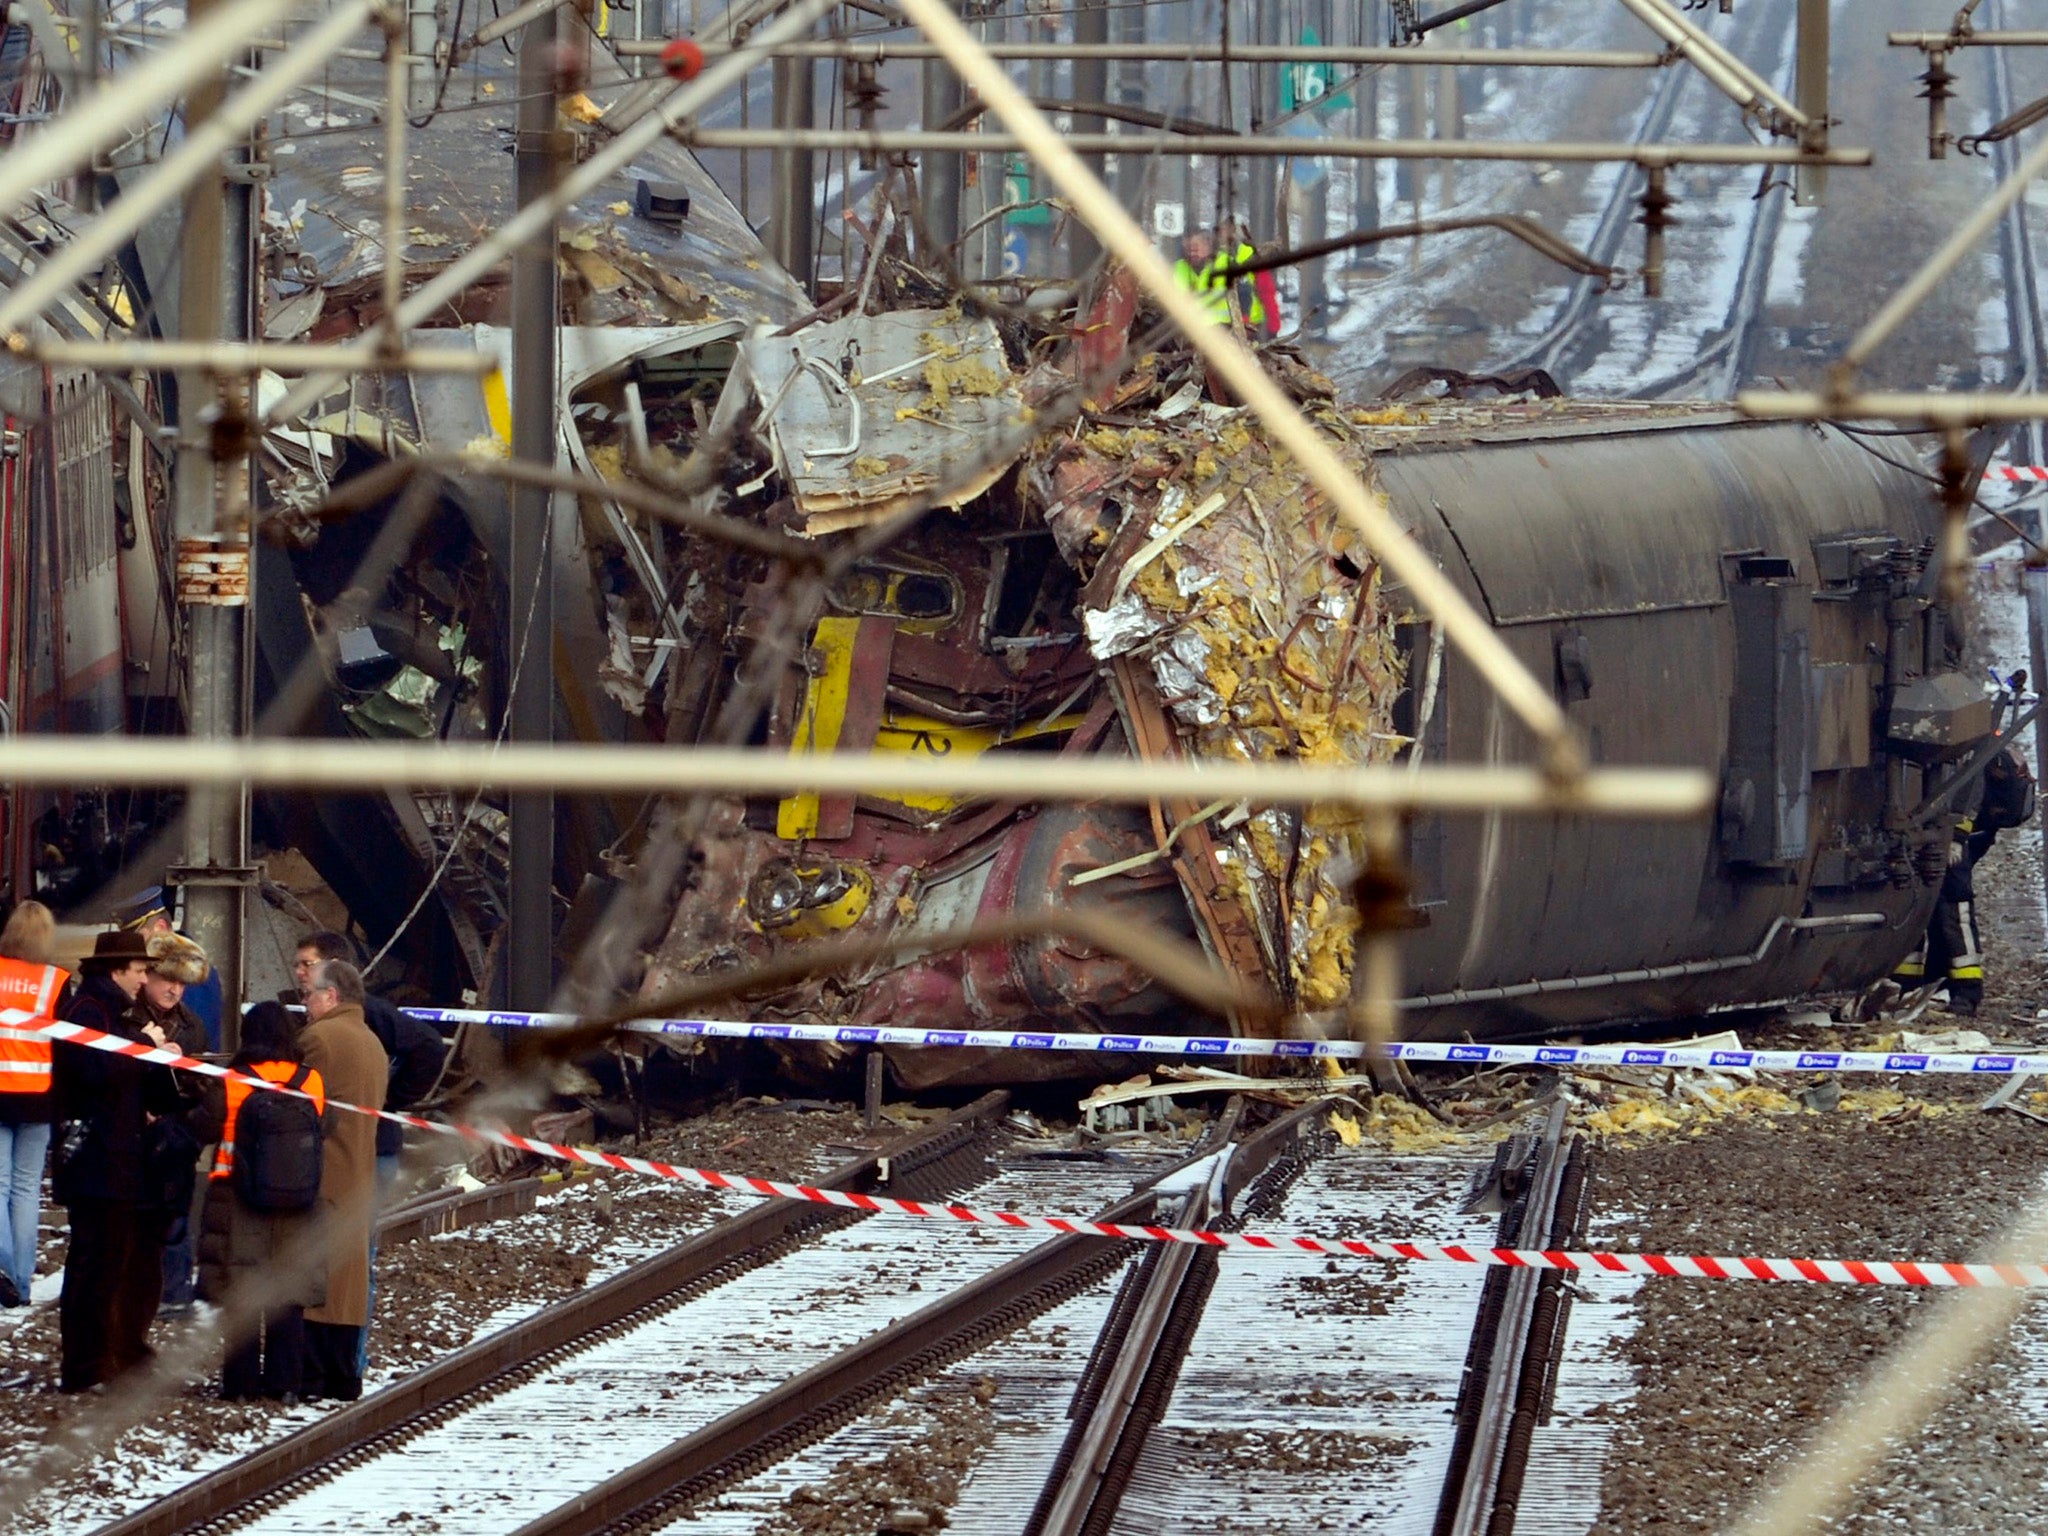 Two commuter trains collided in Buizingen near Brussels in 2010, killing 19 people